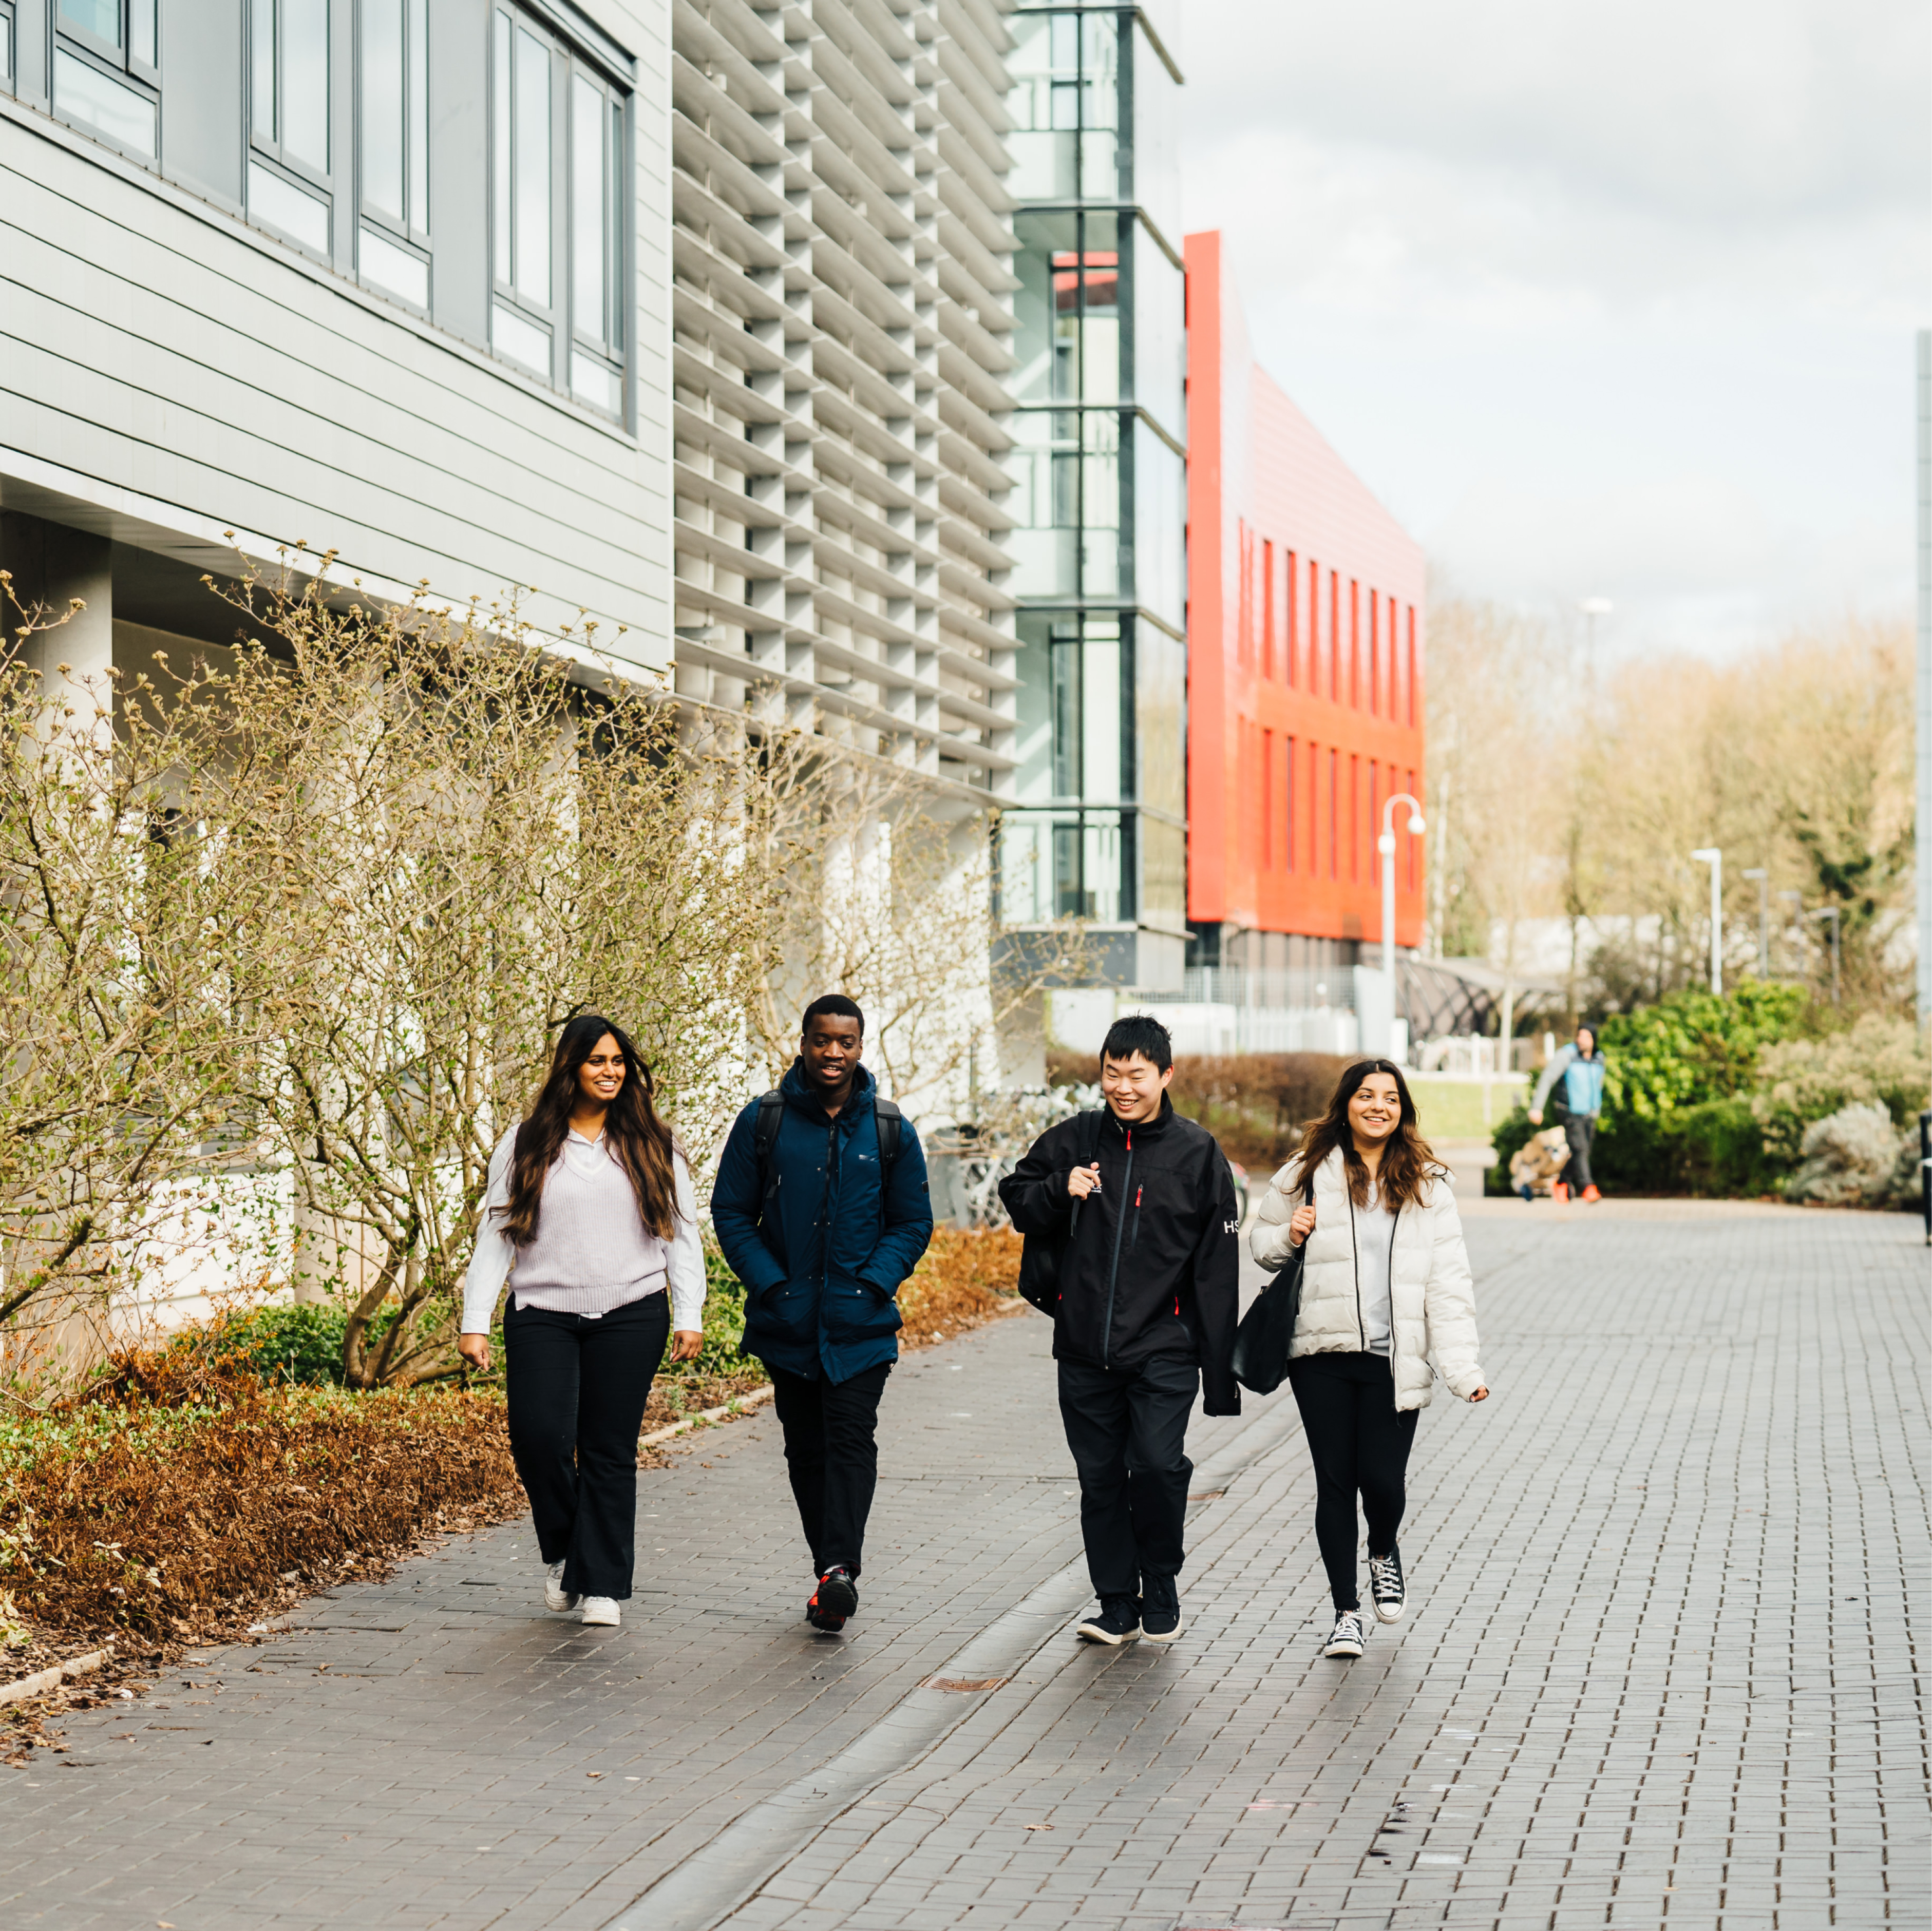 4 students walking through campus